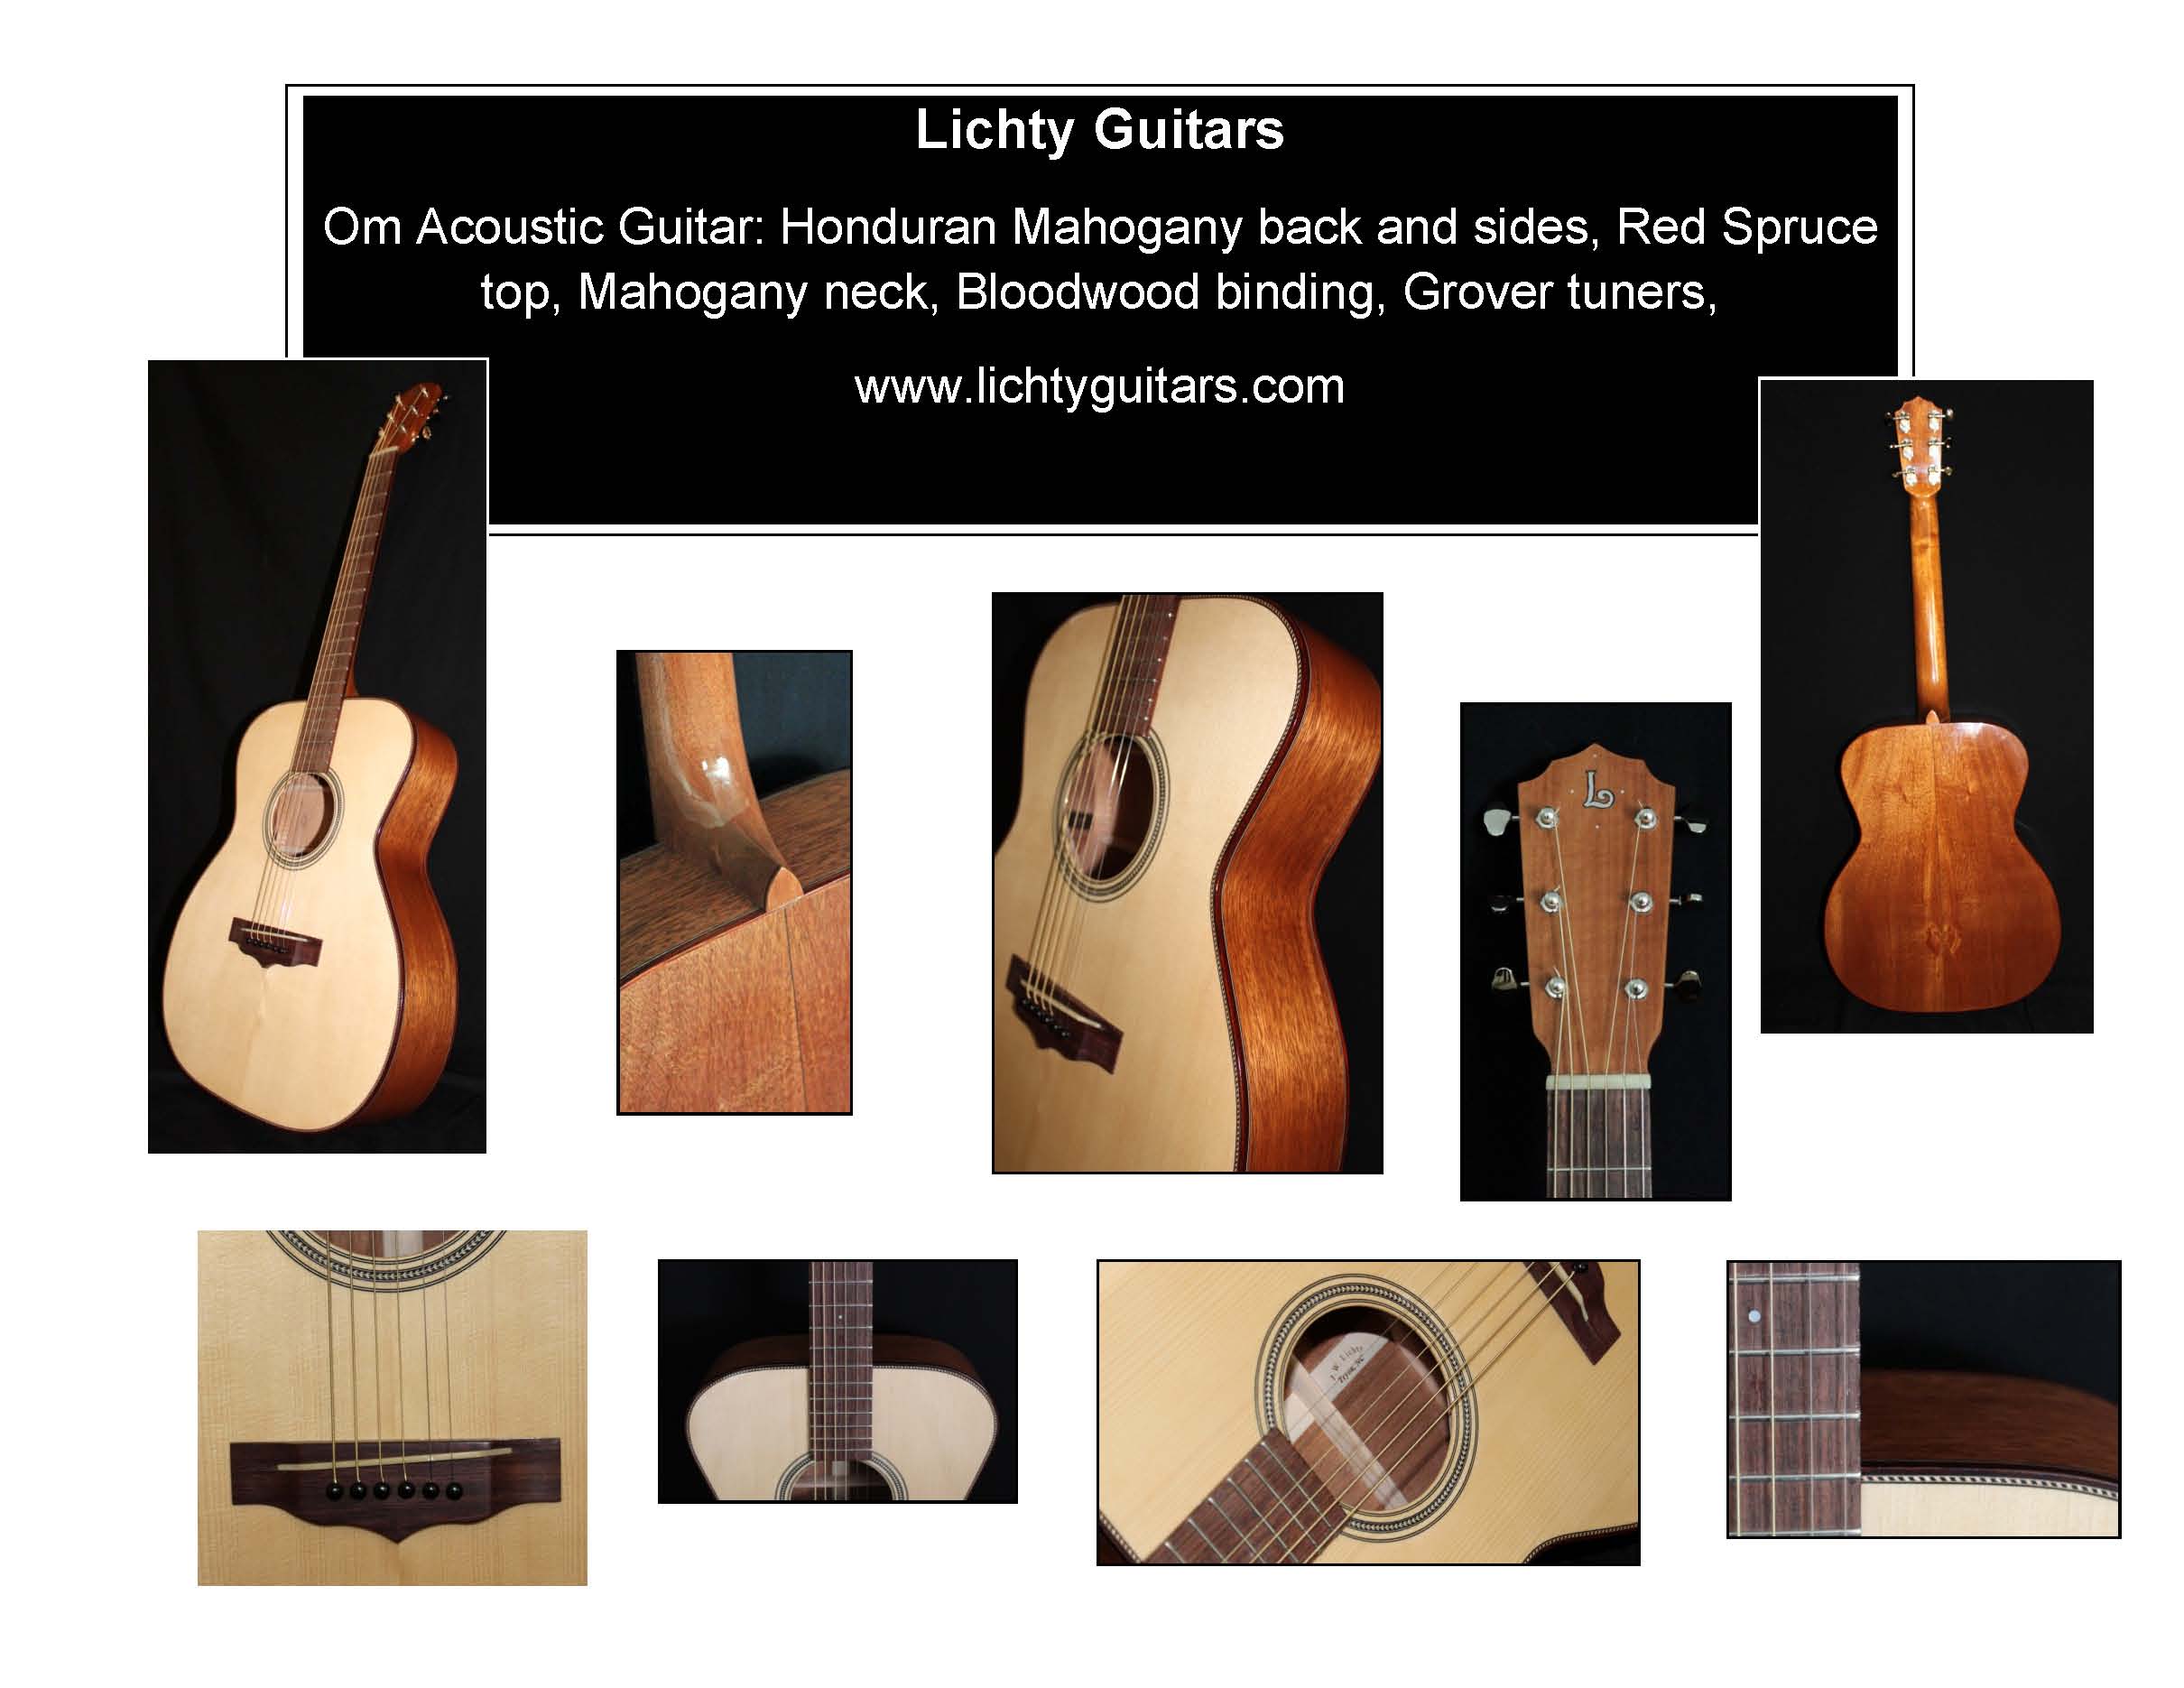 Handmade Acoustic Guitar Auction, Lichty Guitars